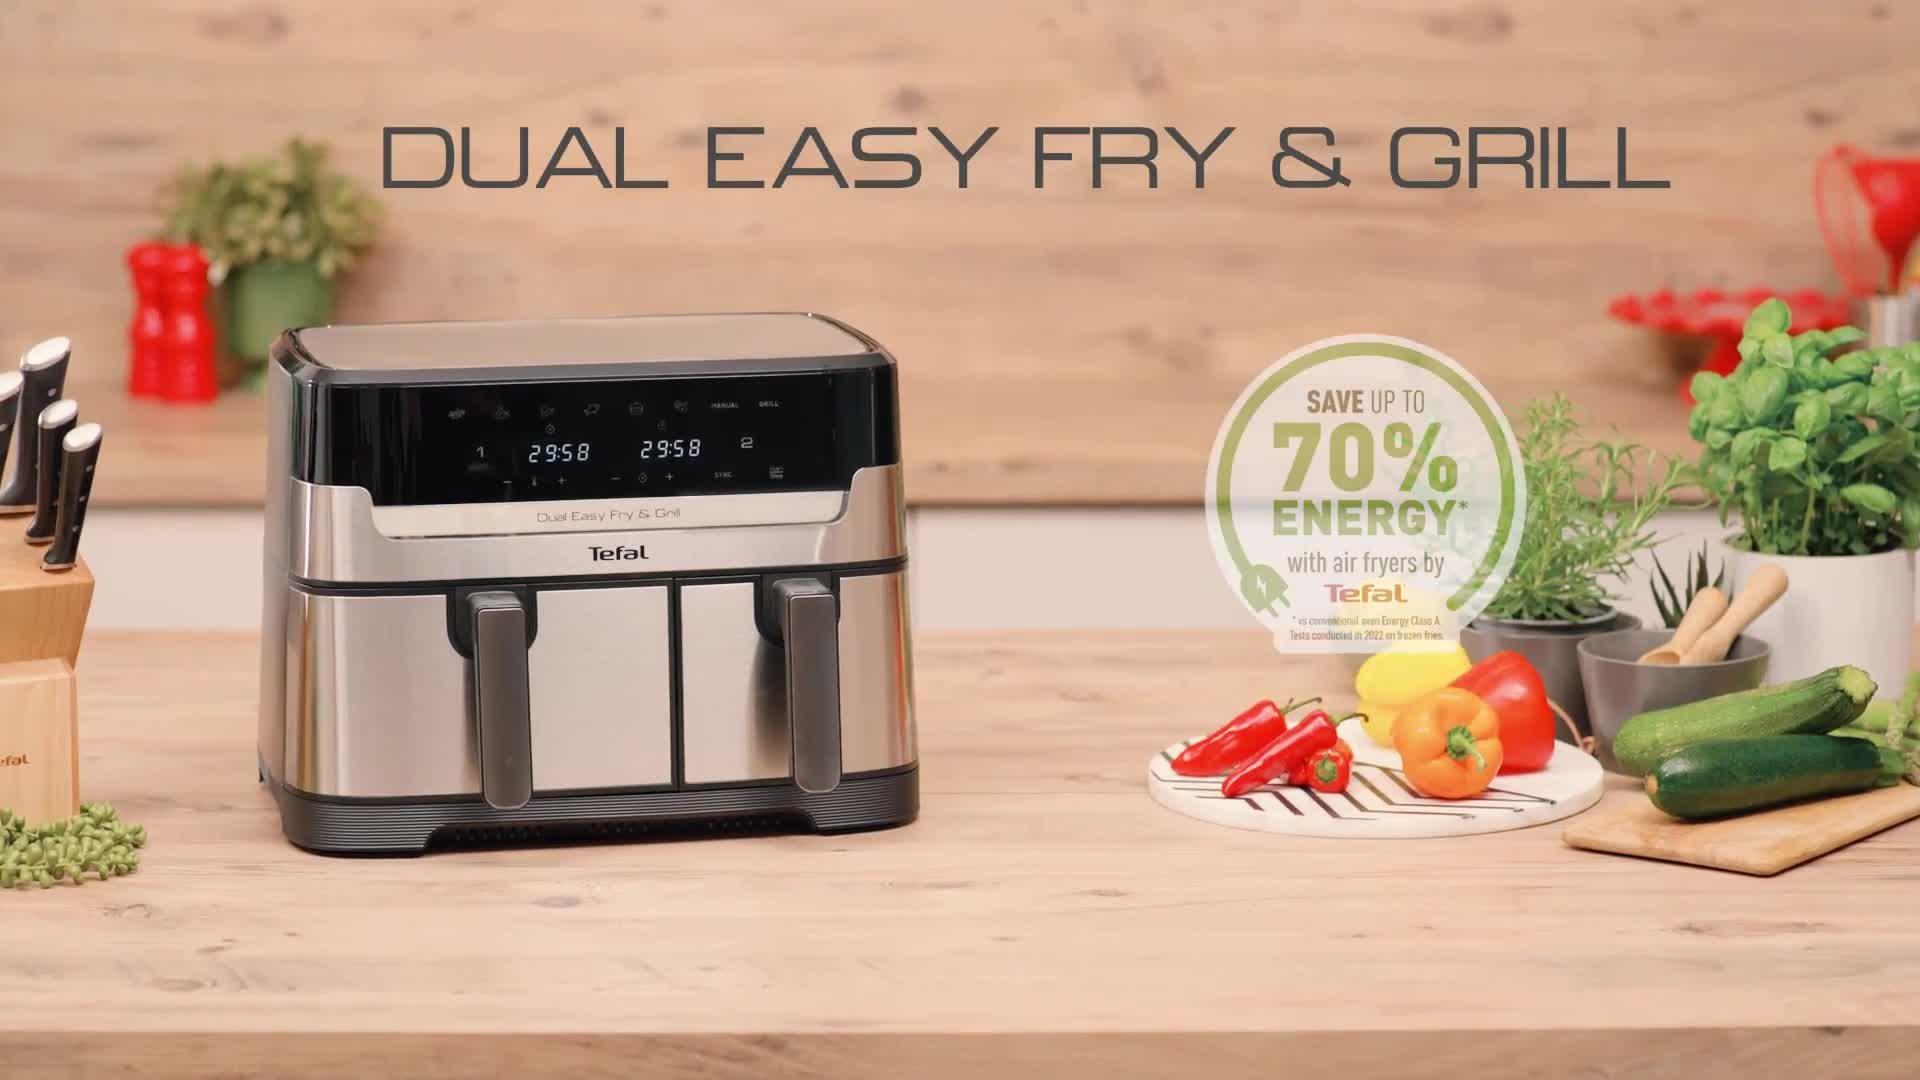 Buy Tefal Easy Fry EY905D40 8.3L Dual Air Fryer & Grill - Silver